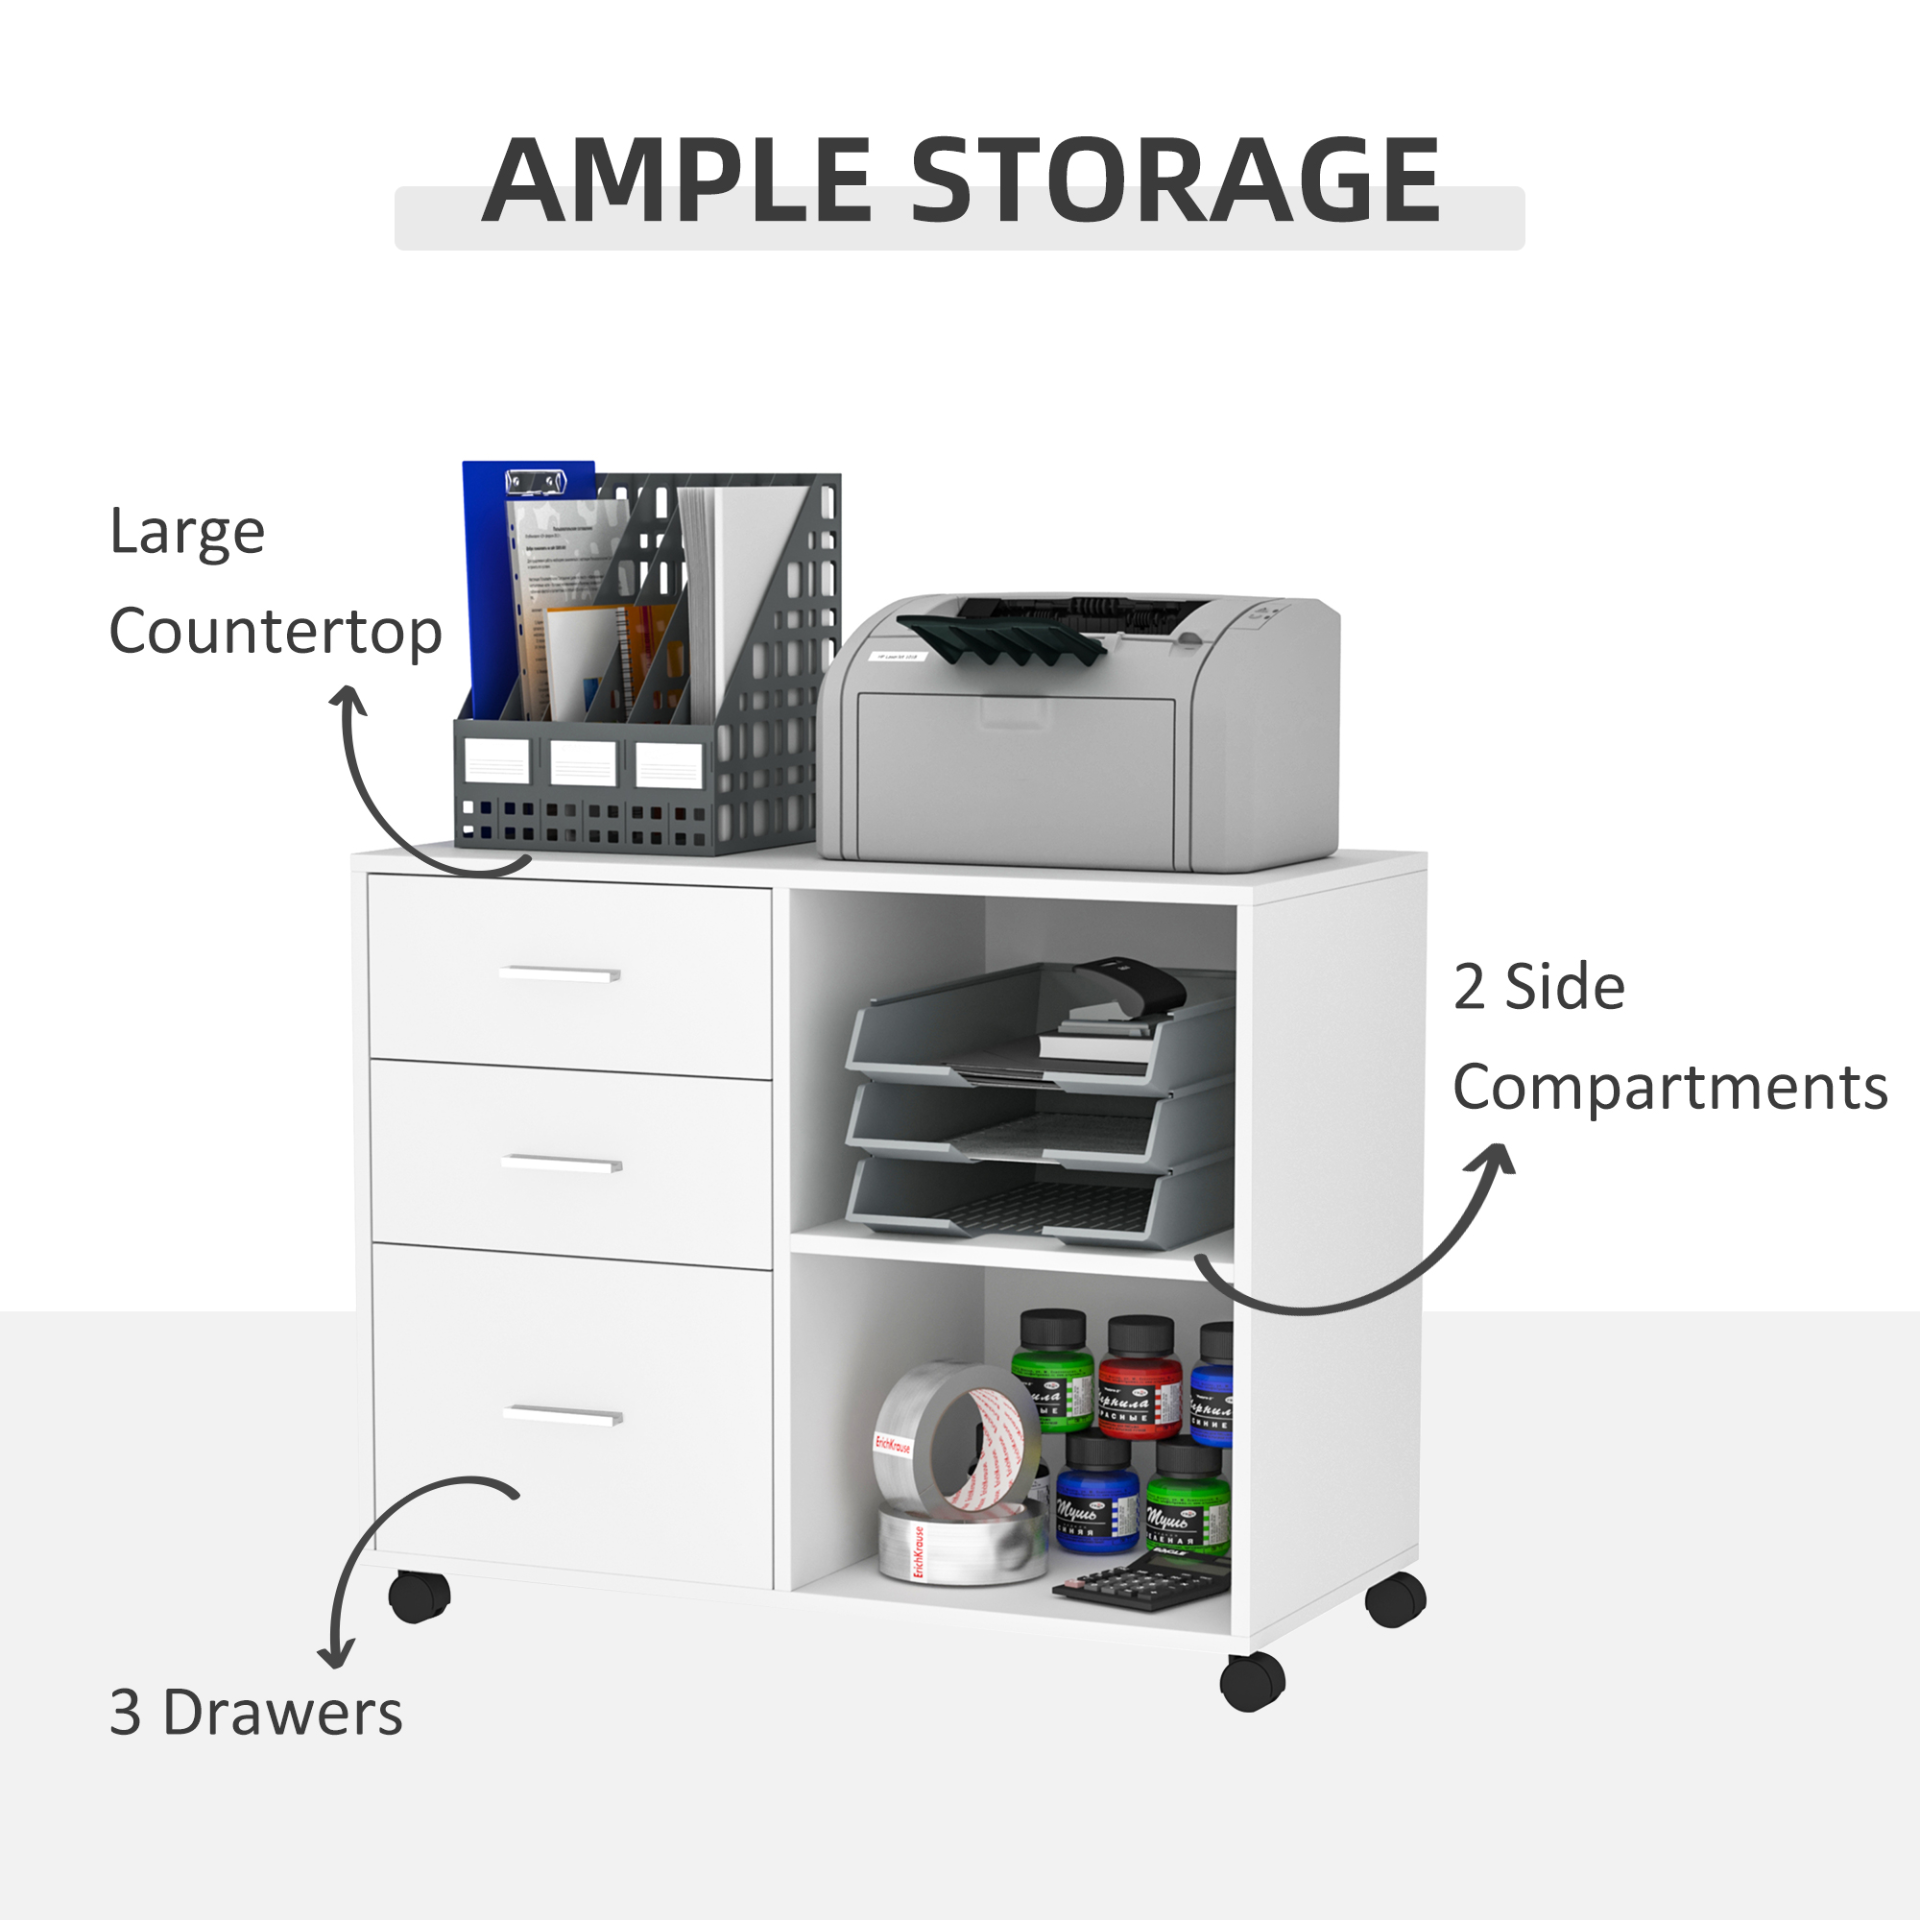 HOMCOM Freestanding Printer Stand Unit Office Desk Side Mobile Storage w/ Wheels 3 Drawers, 2 Open Shelves Modern Style 80L x 40W x 65H cm - White